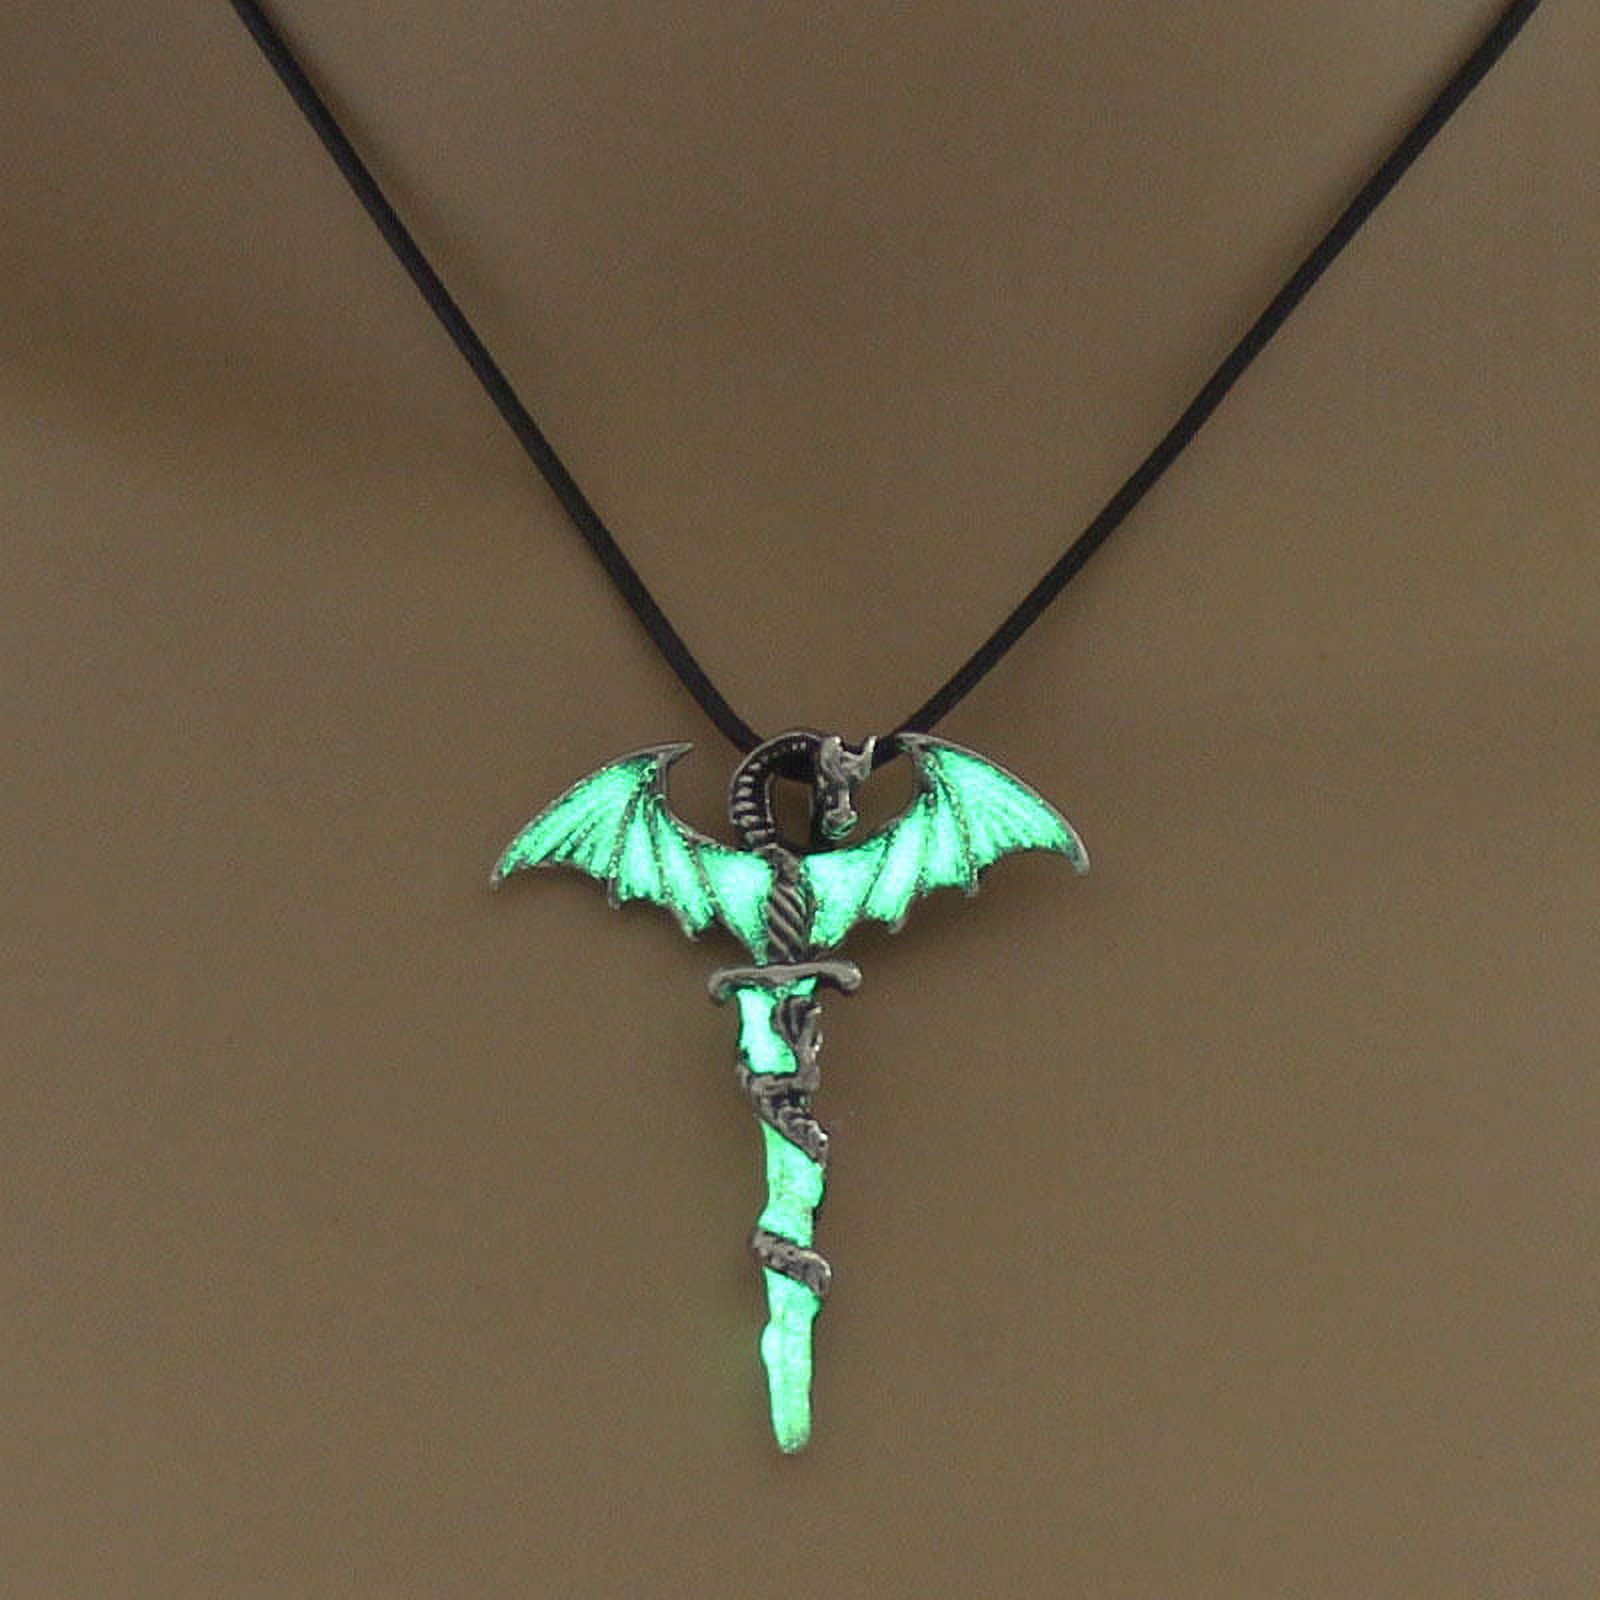 1 Pcs Women Men Necklace Chain Dragon Glow in the Dark Pendant Fashion Jewelry - image 3 of 4